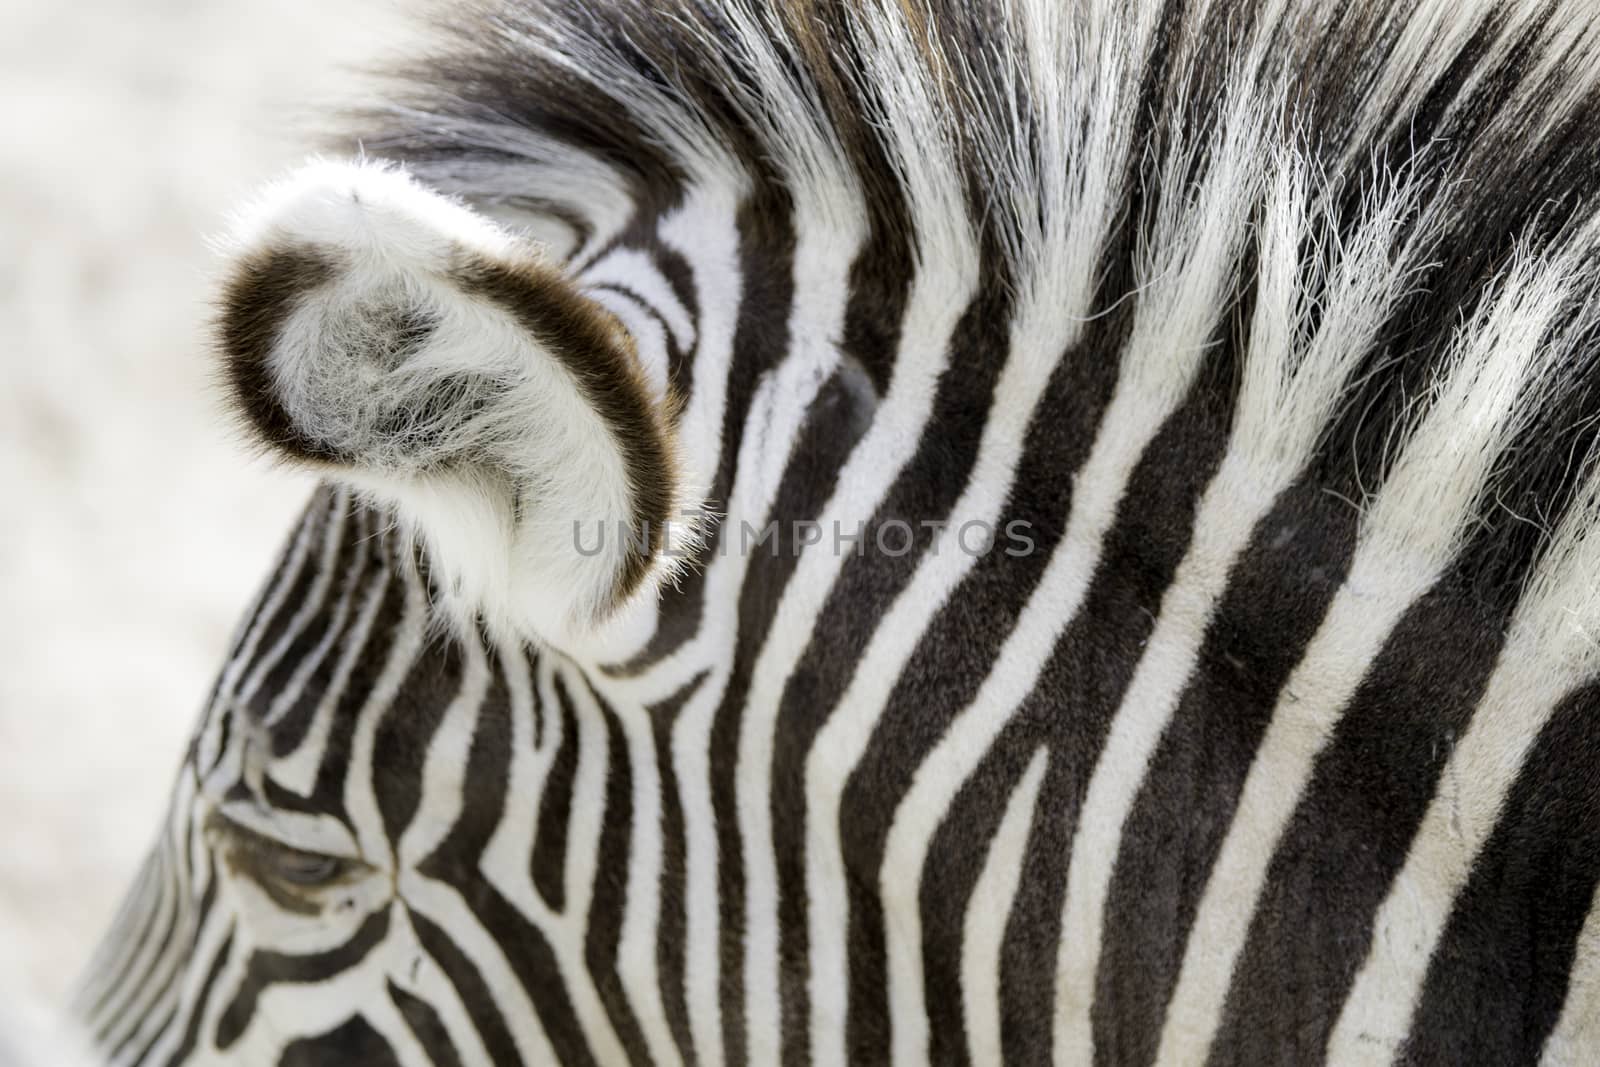 Imperial zebra by thomas_males